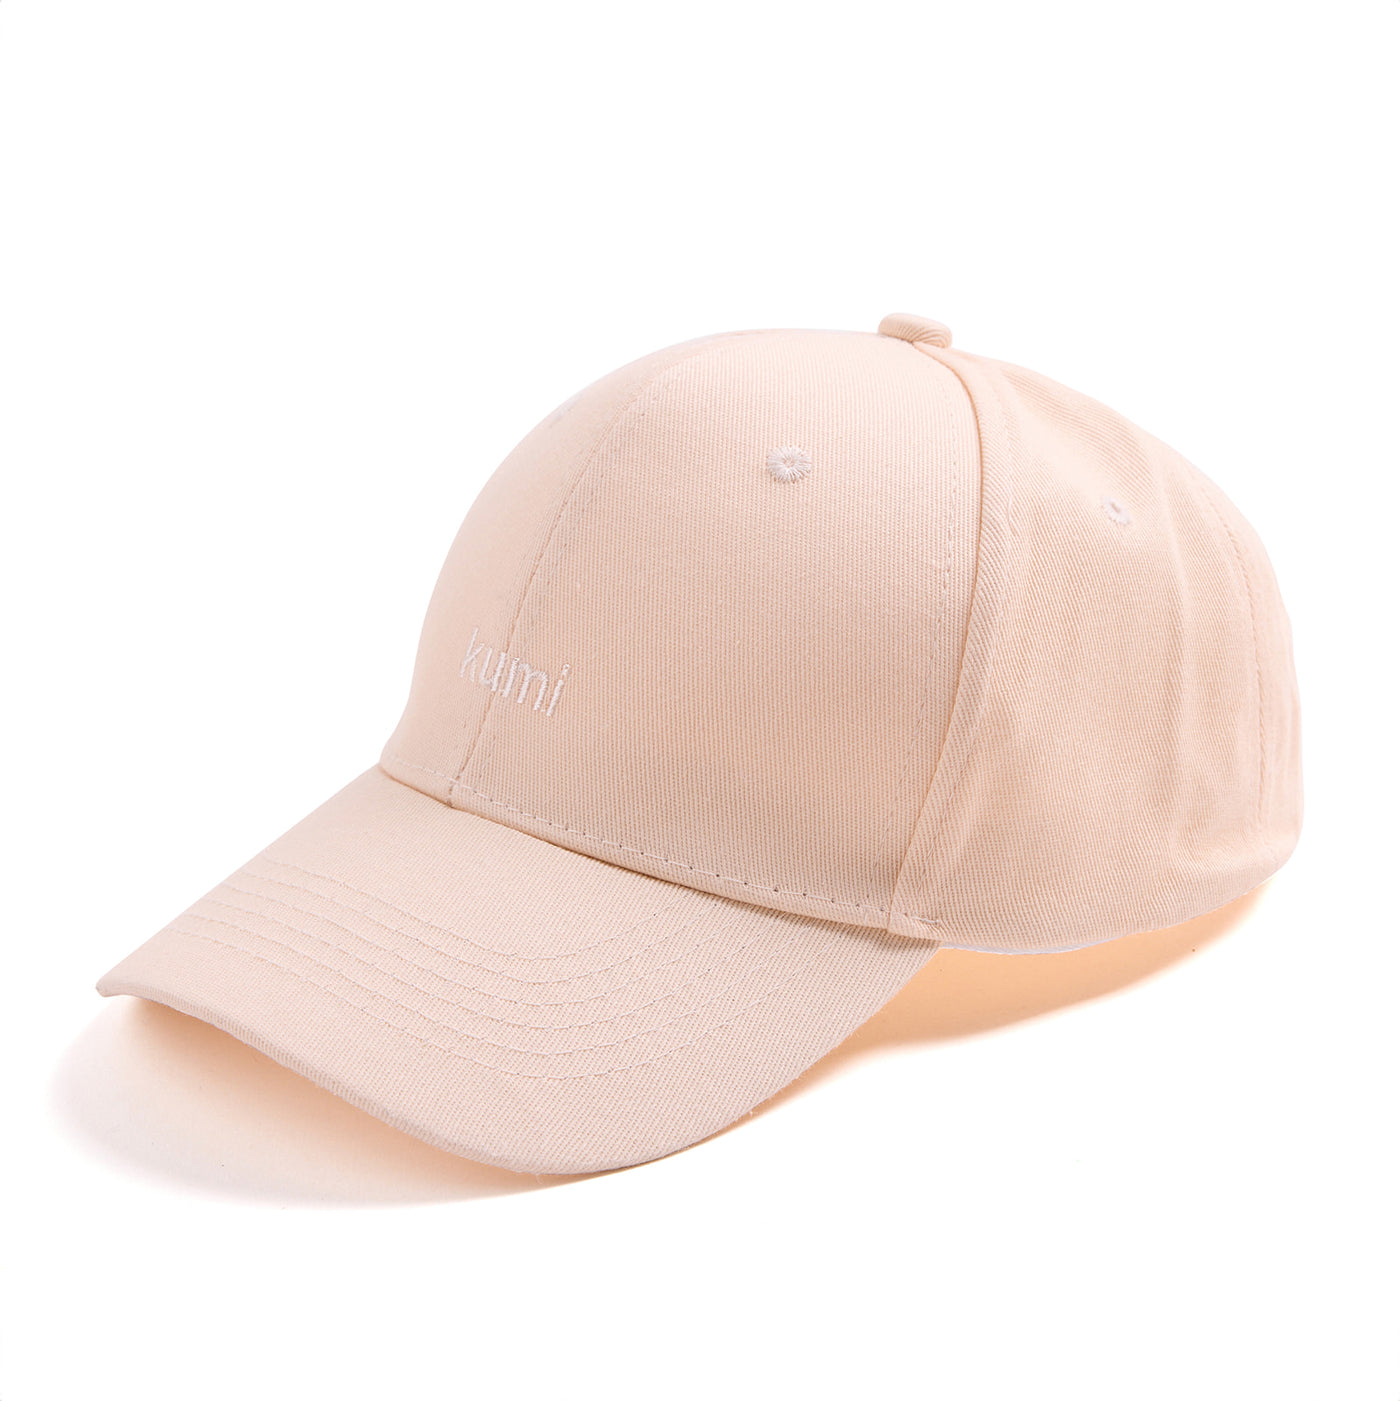 Offwhite cap hat